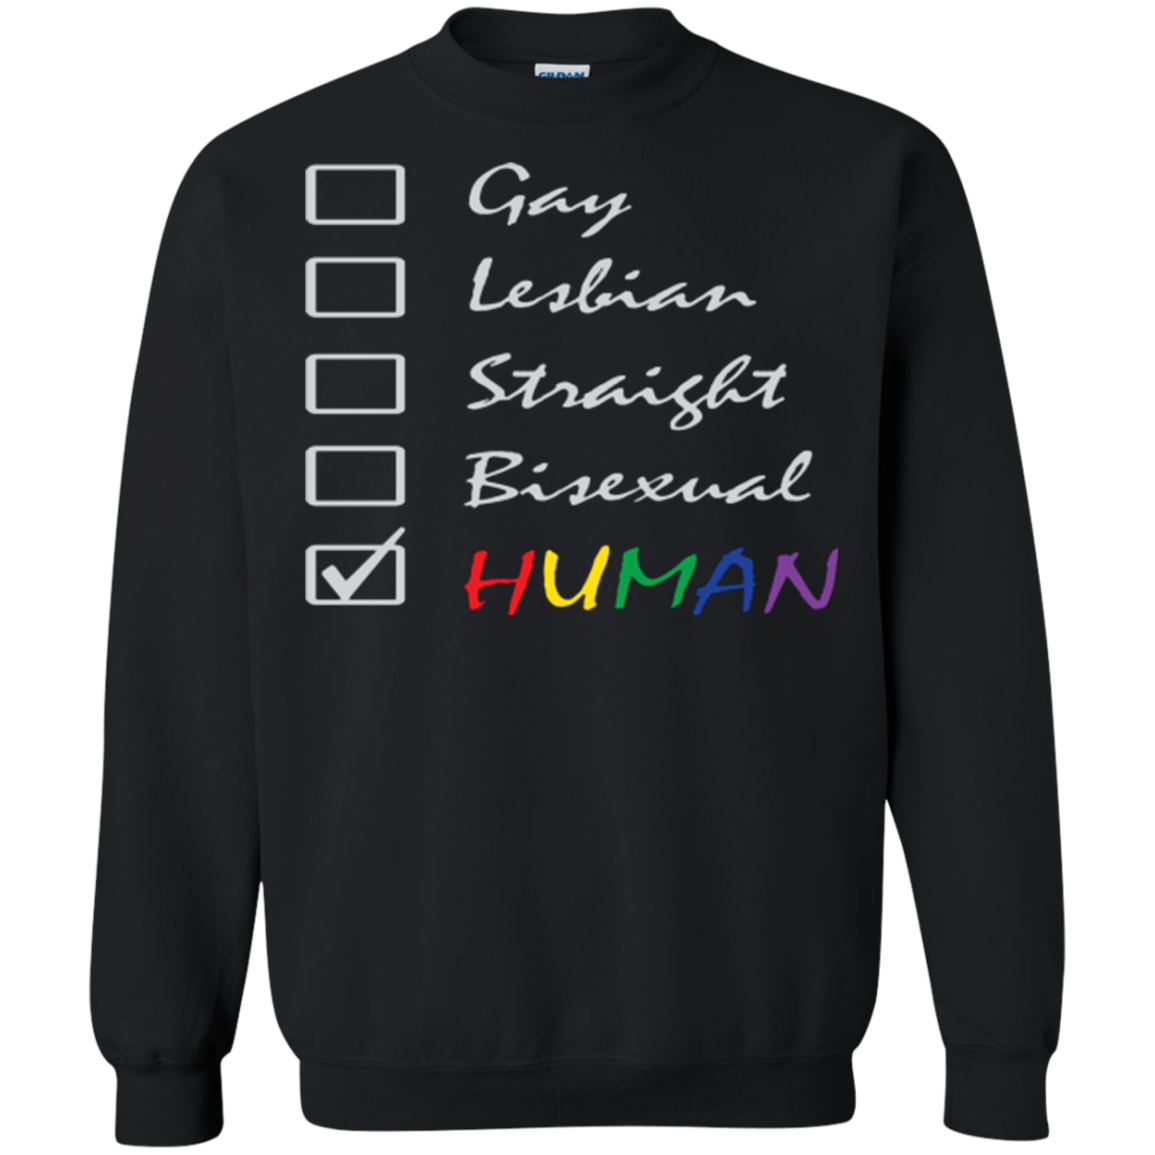 Human Check Box LGBT Pride black full sleeves full sleeves Sweatshirt for Men & Women Human Equality LGBT Pride black full sleeves Sweatshirt for Men & Women